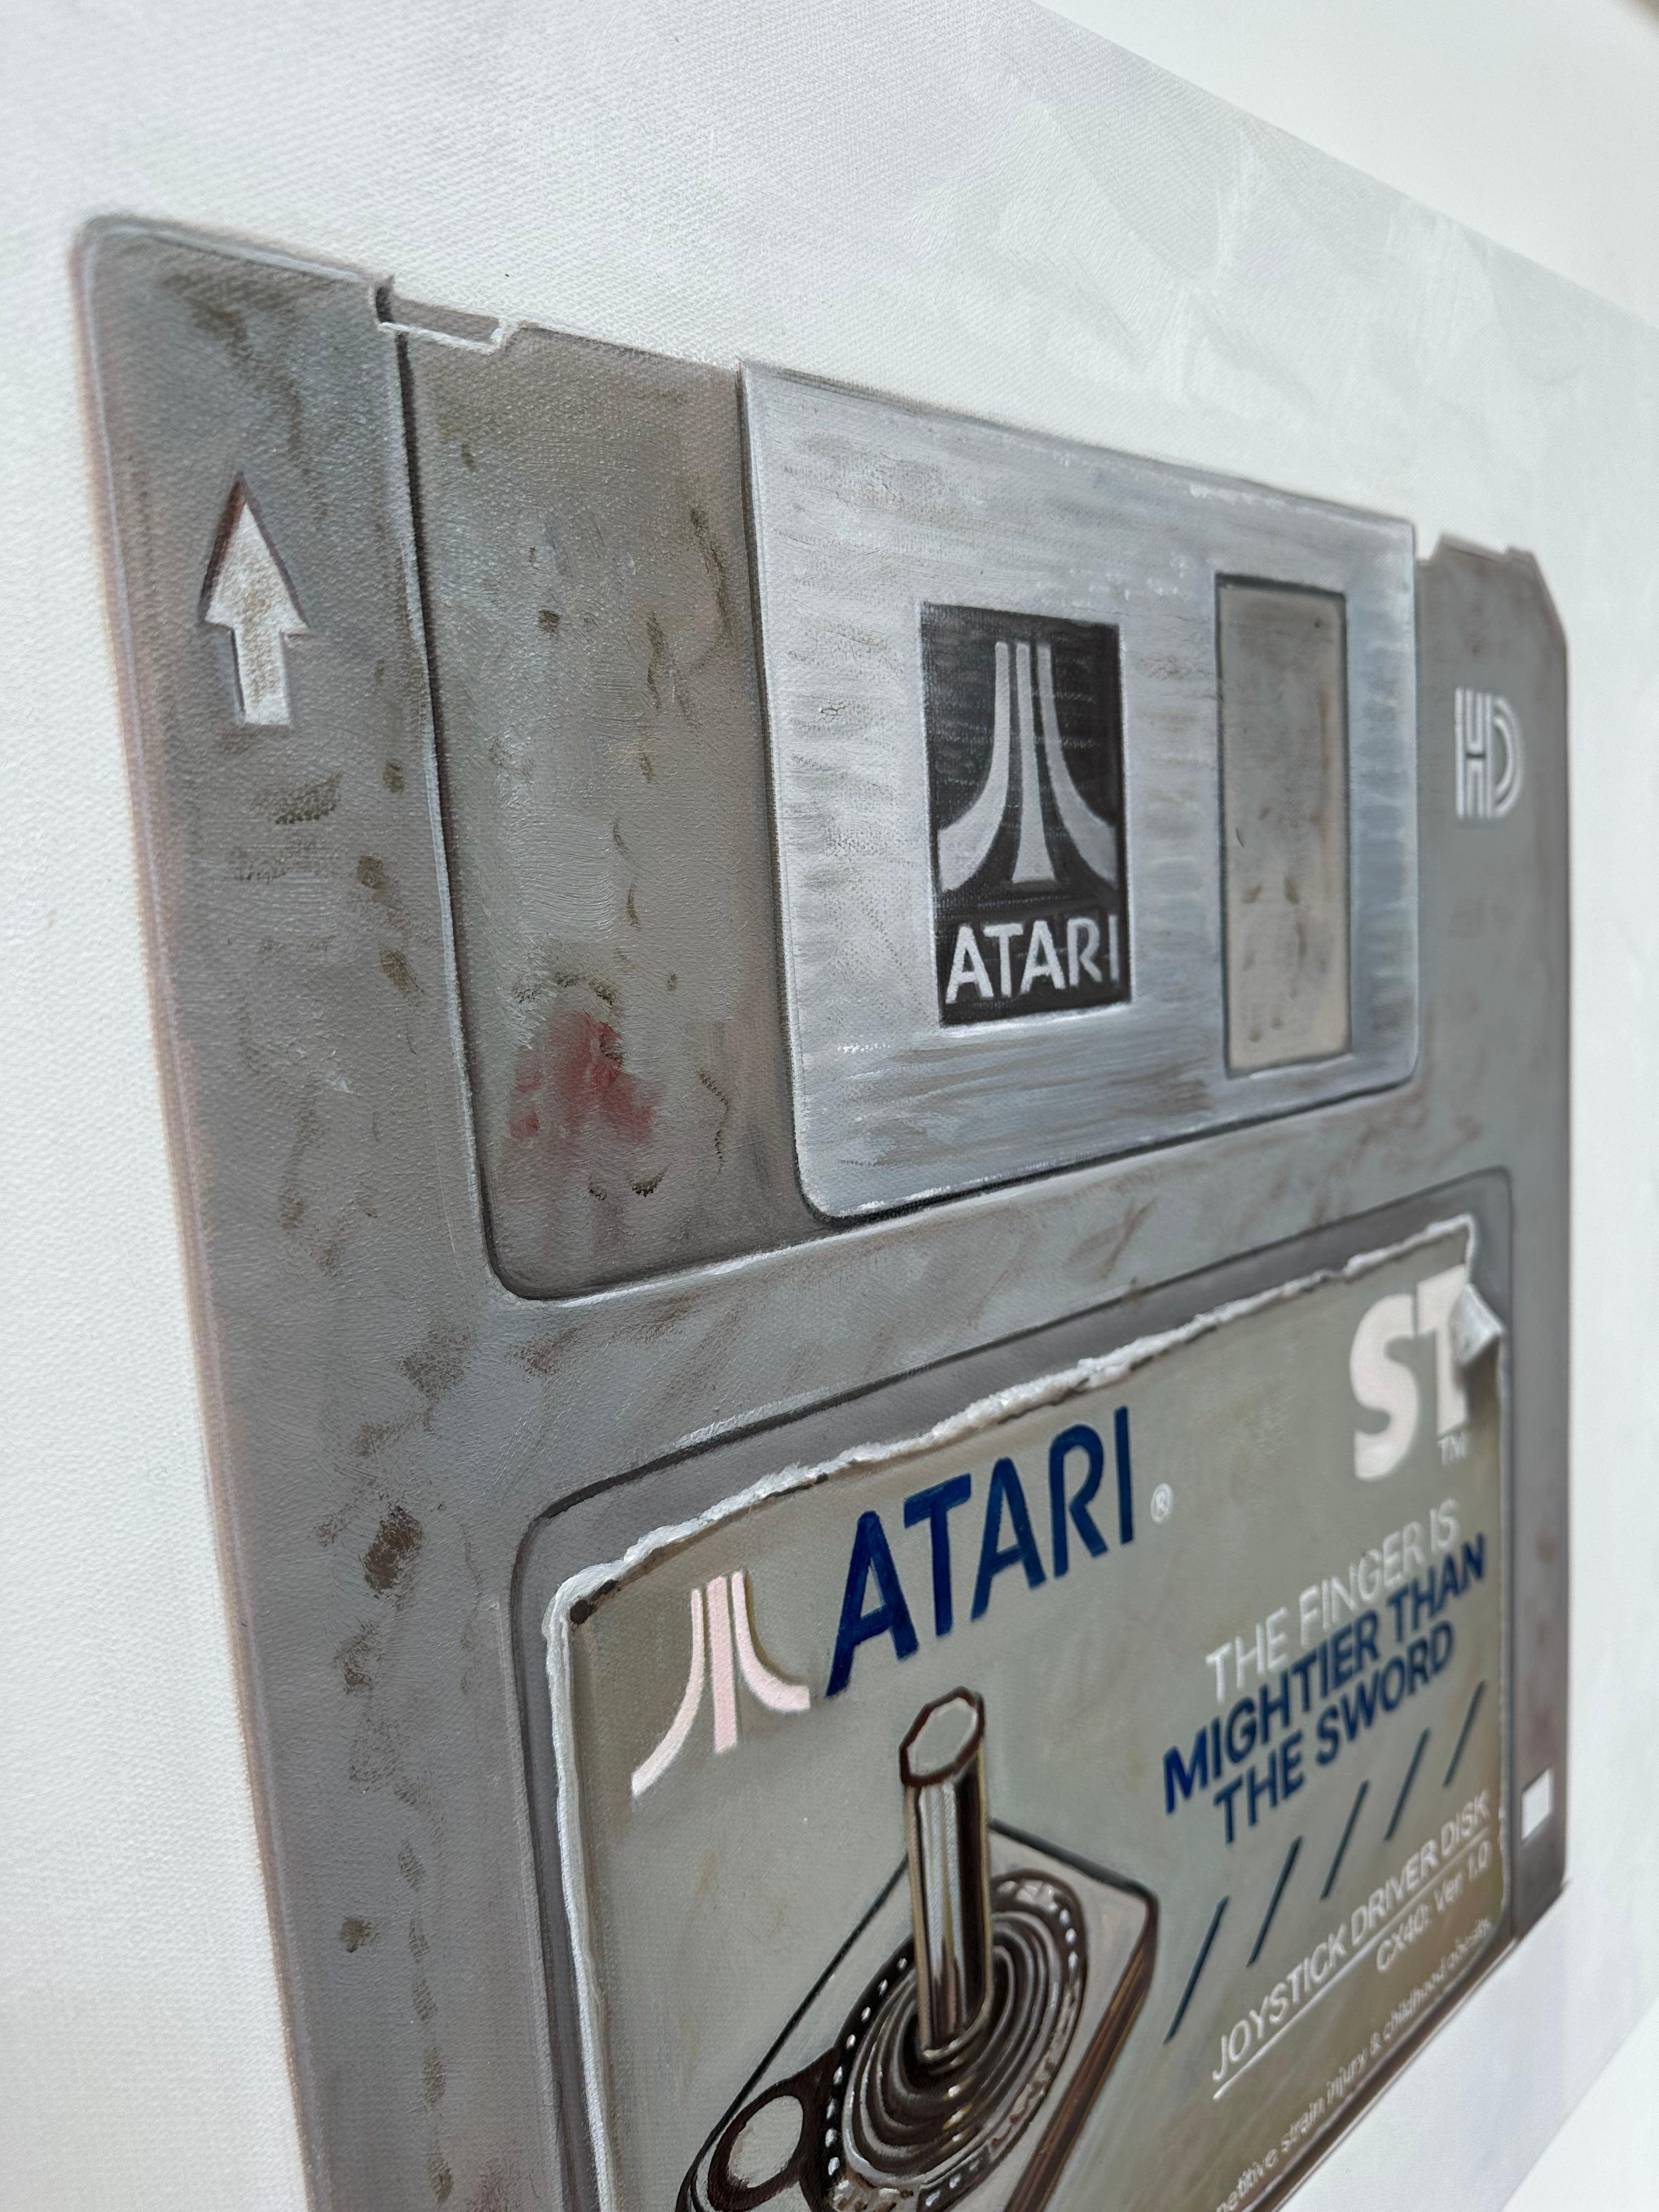 Arlo Sinclair - Atari CX40 : Disque de pilotage du joystick - 3.5